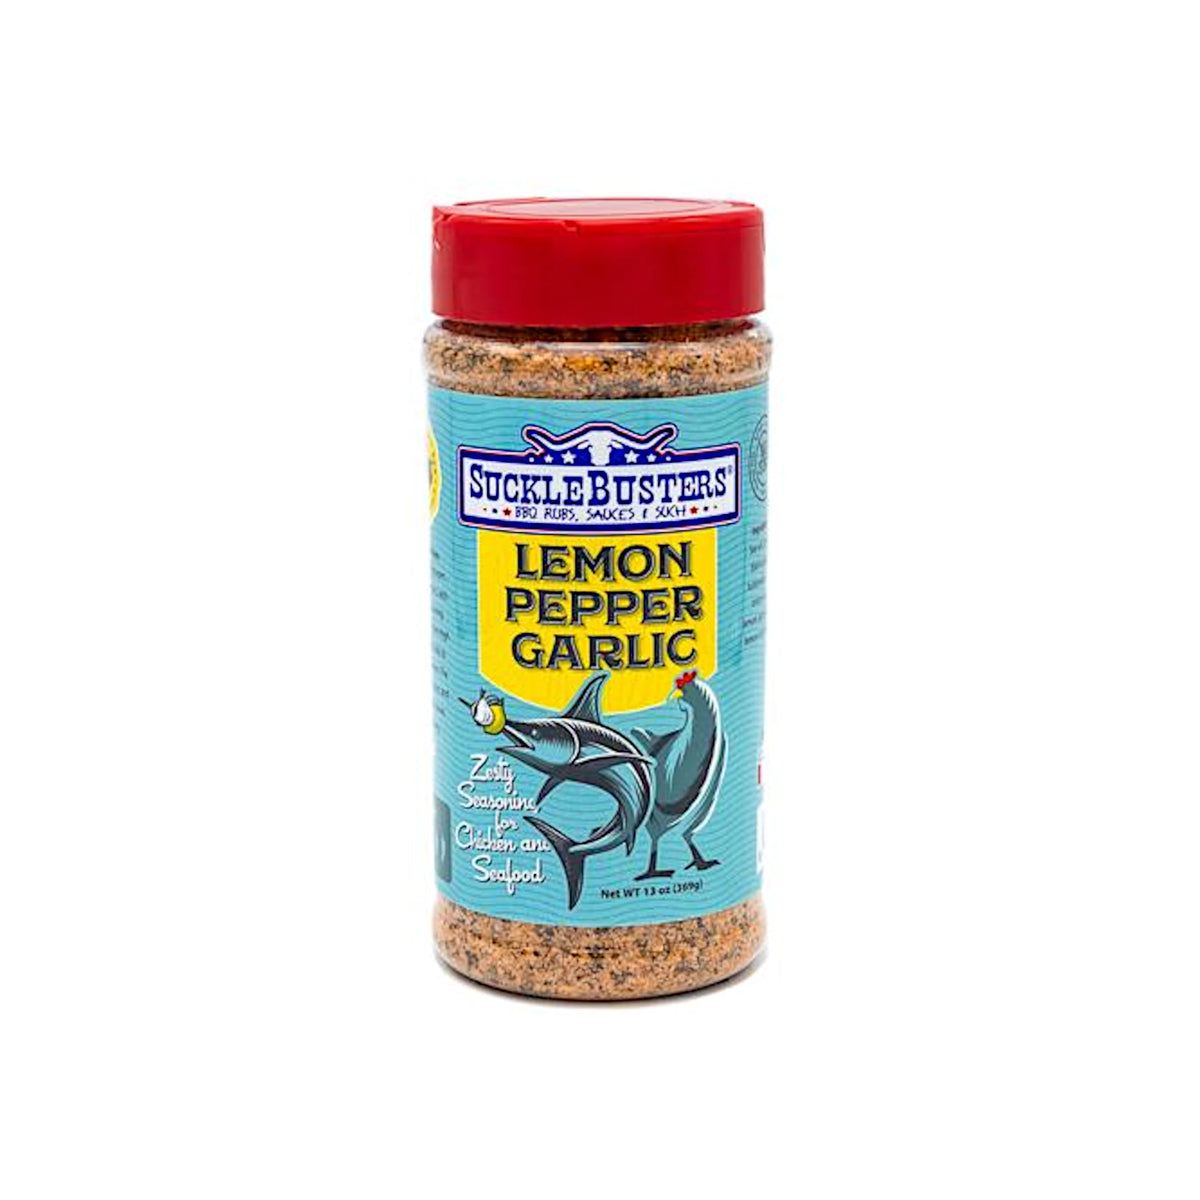 SUCKLEBUSTERS Lemon Pepper Garlic